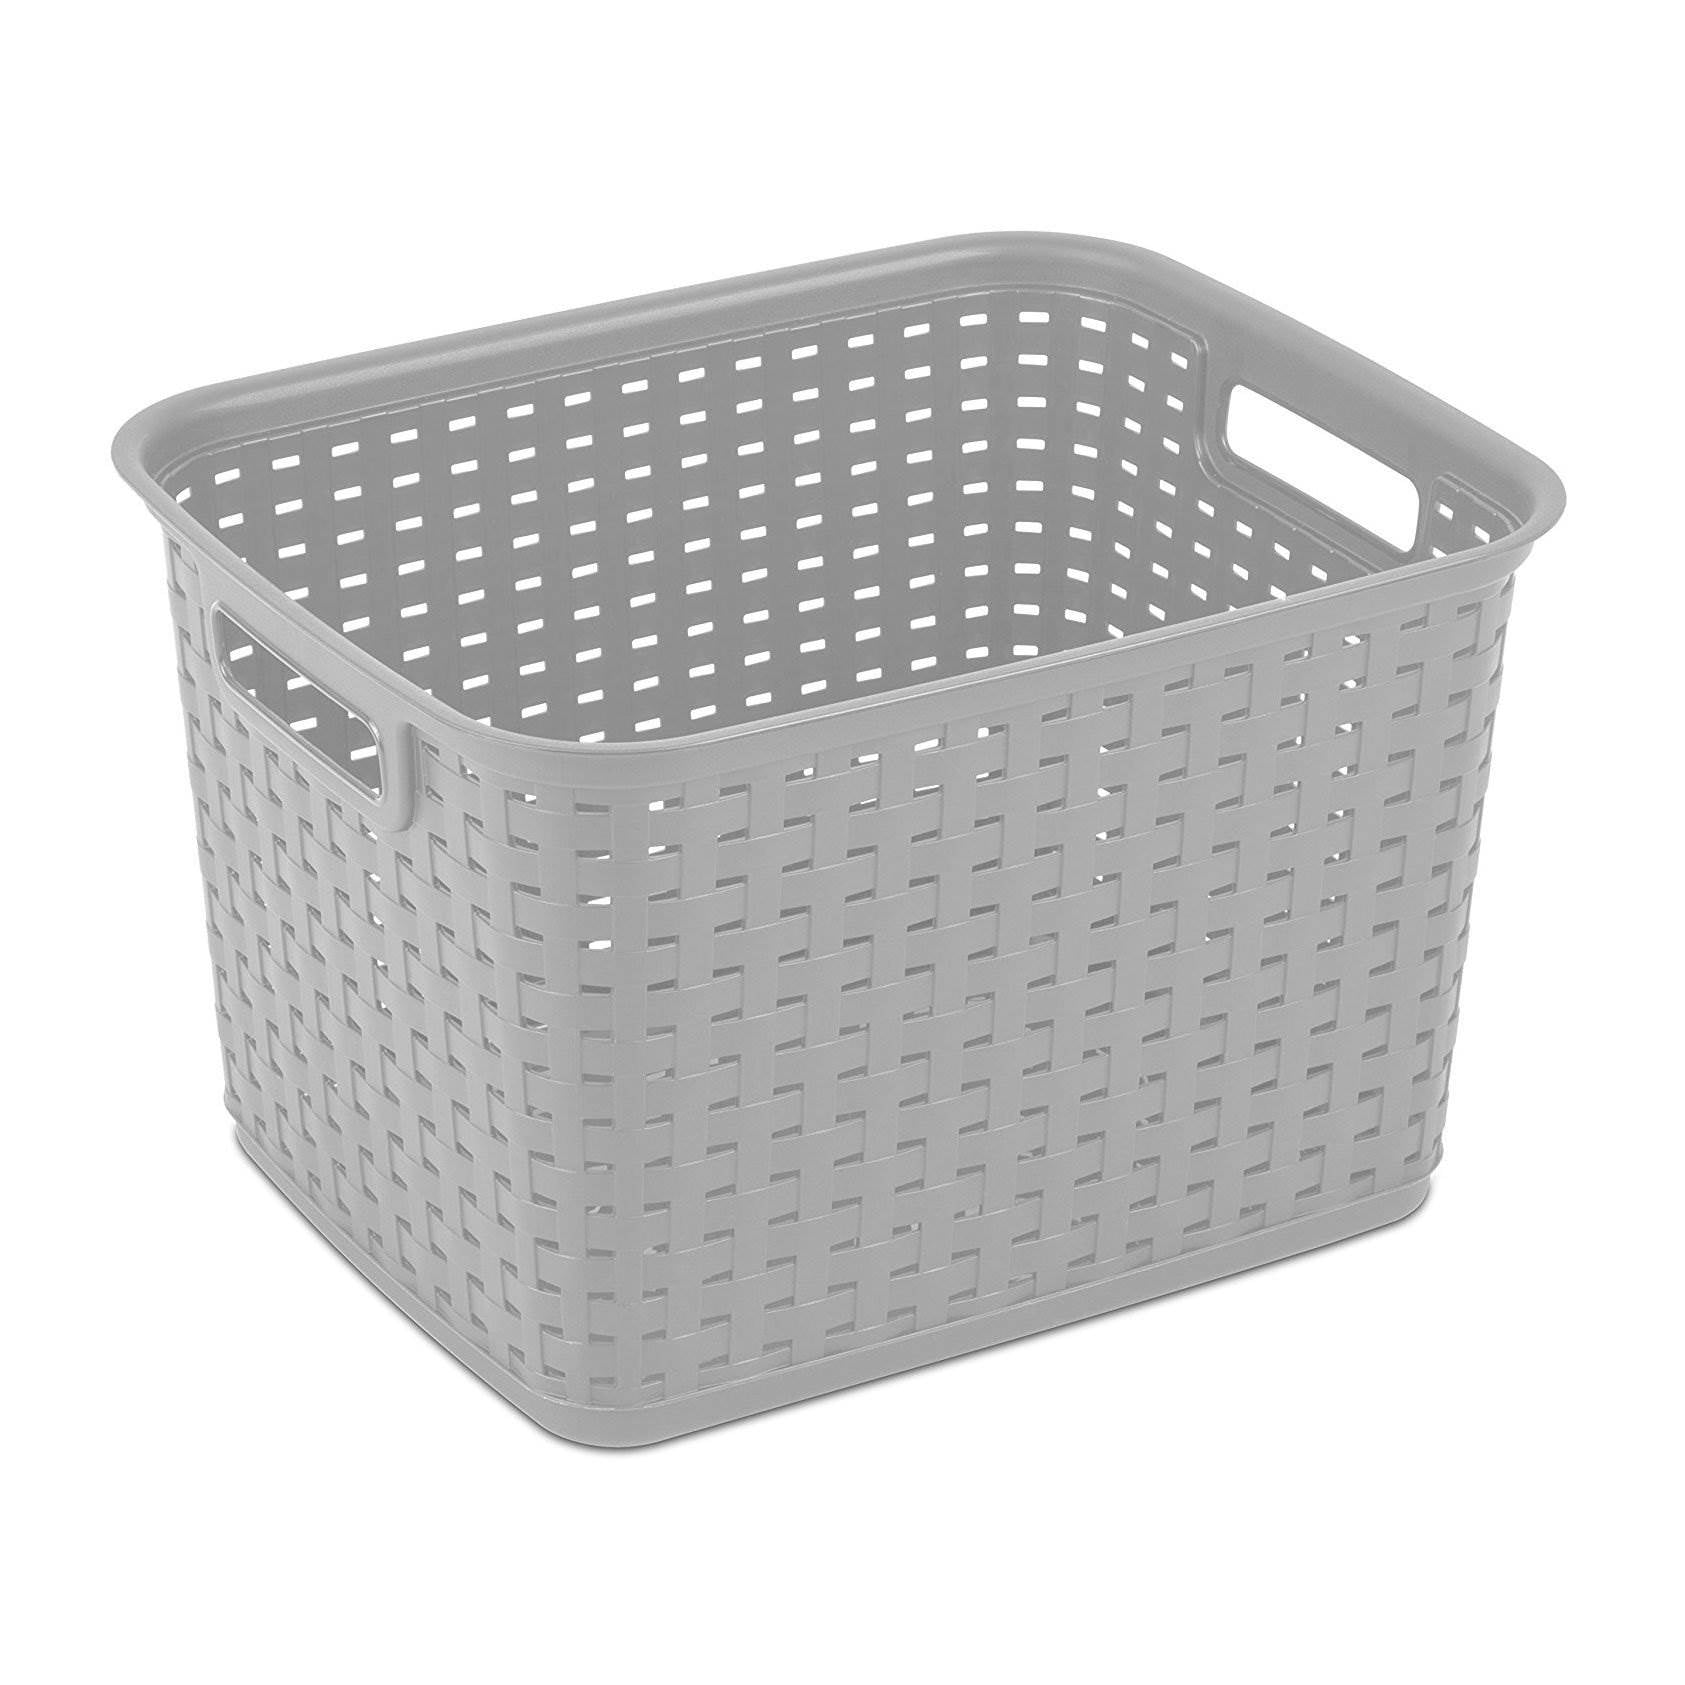 Sterilite Ultra Square Plastic Laundry Basket, White, 6 Pack 